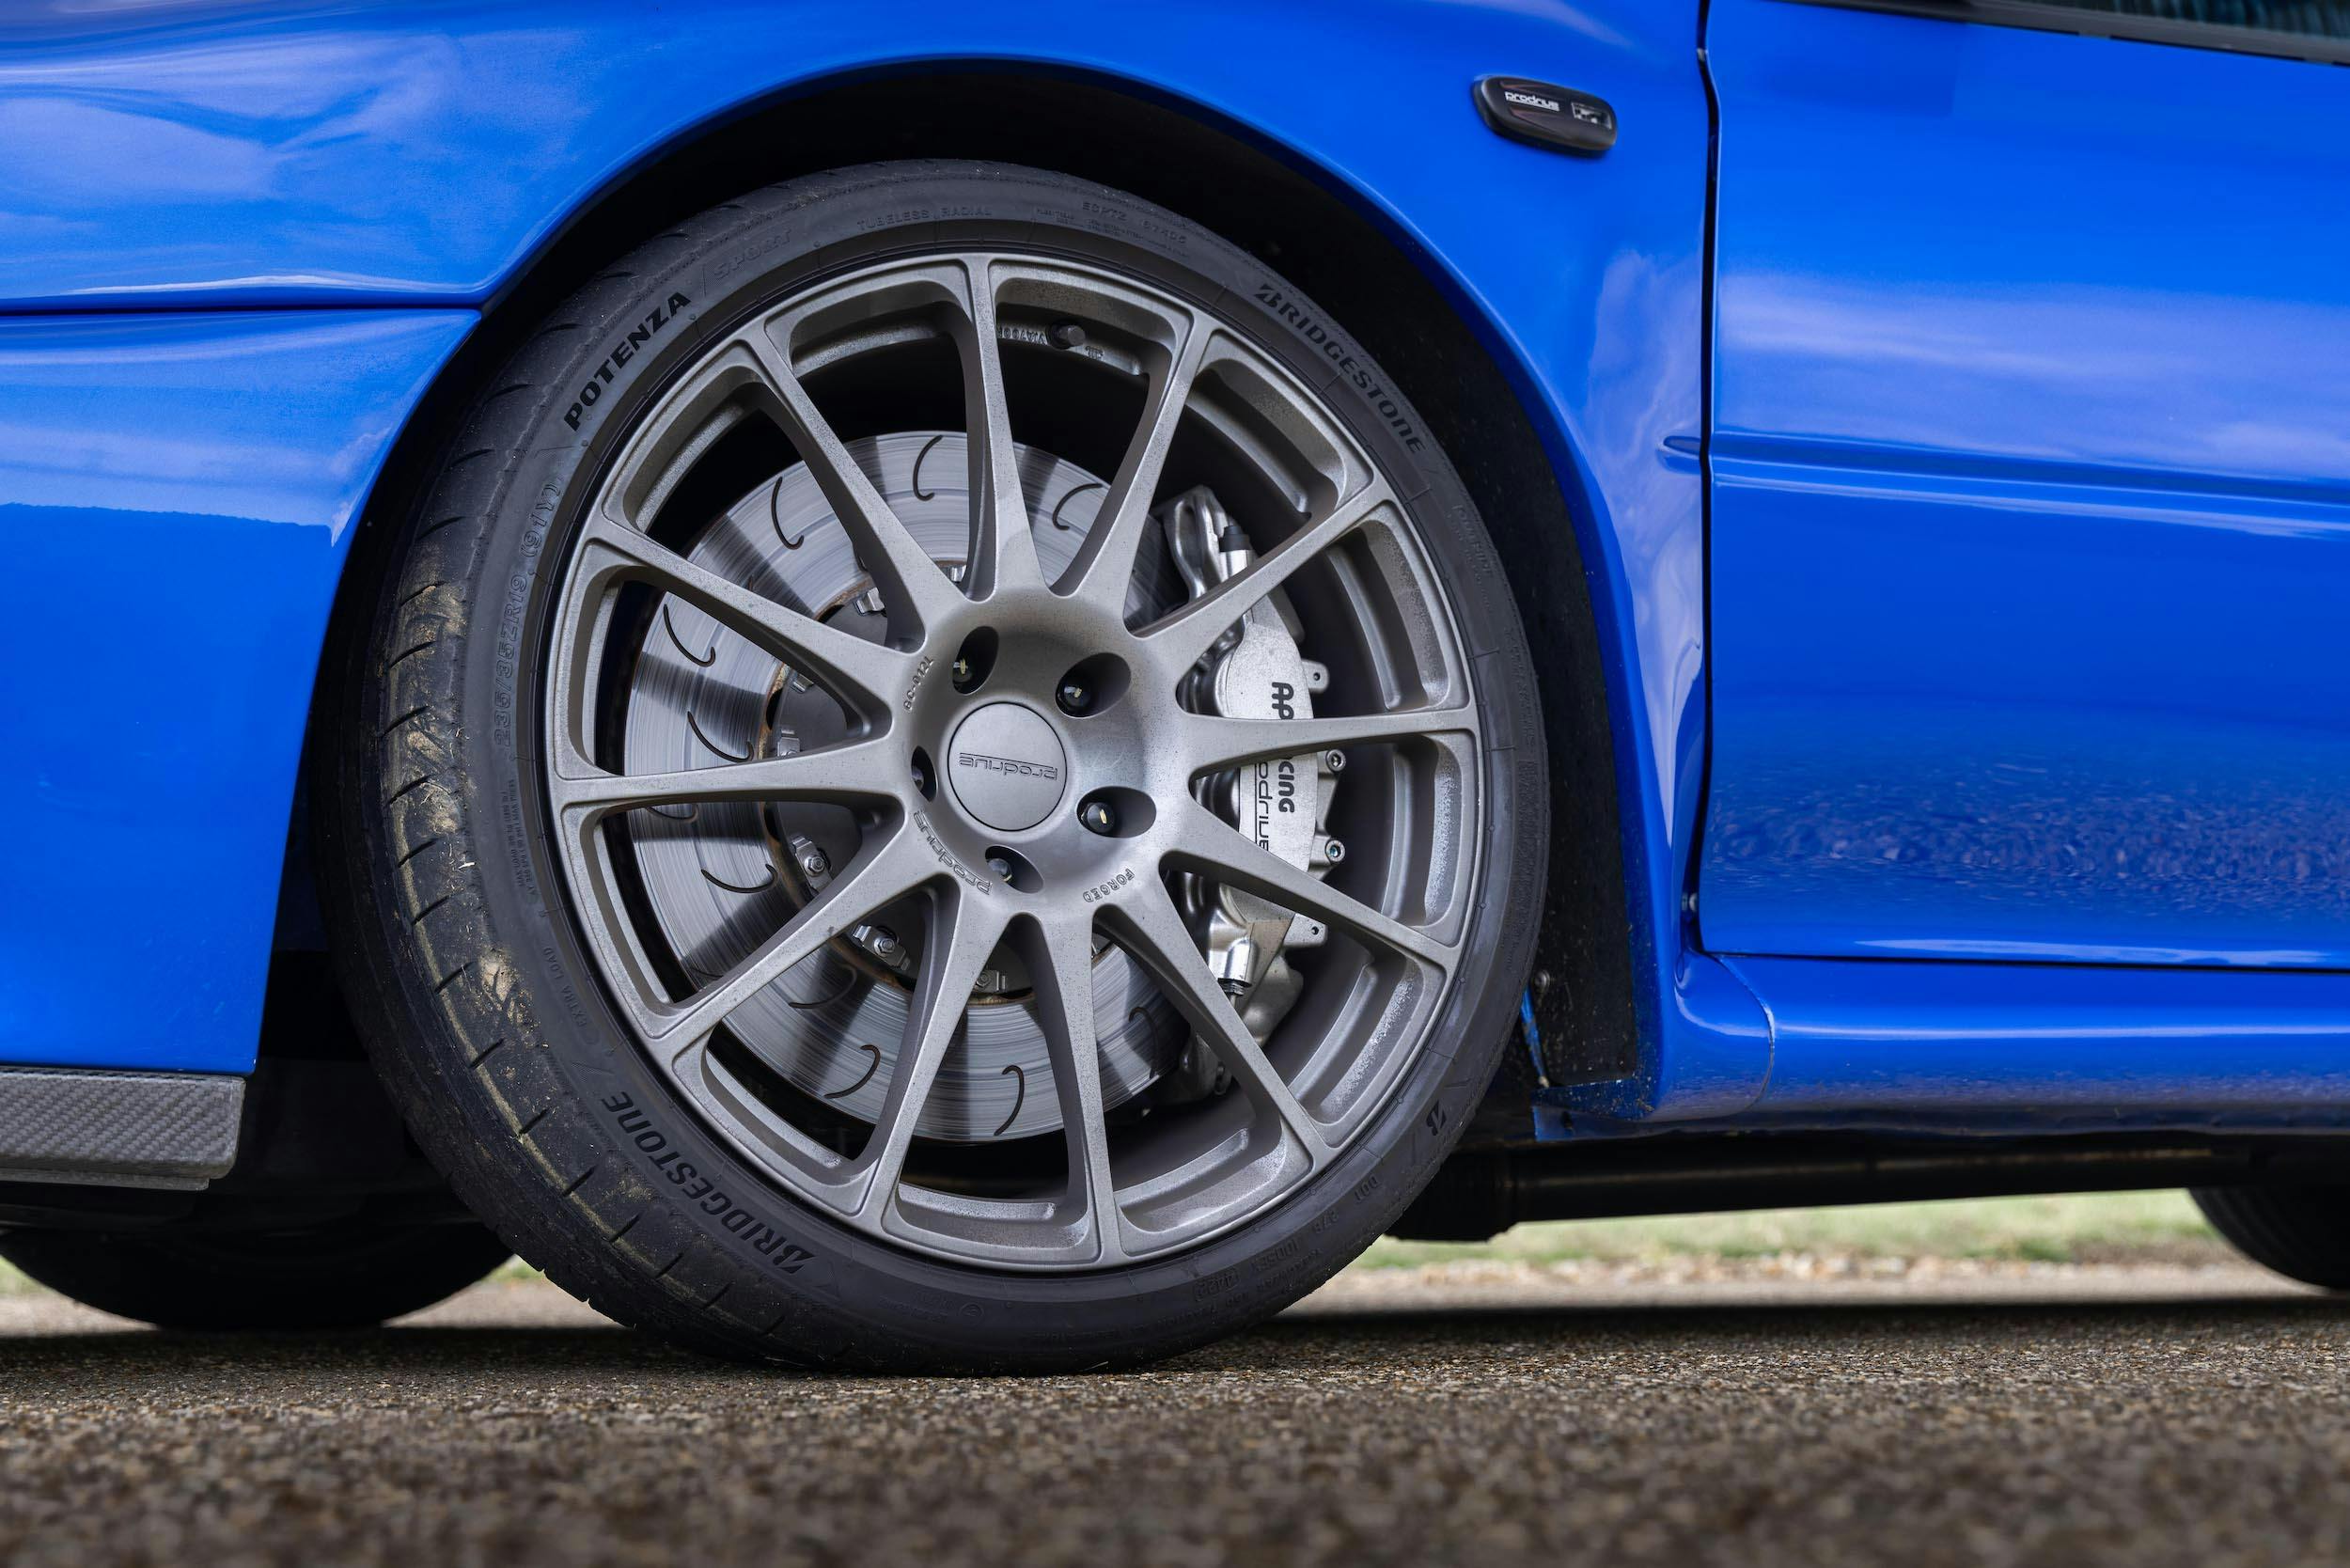 P25 Subaru Prodrive front wheel tire